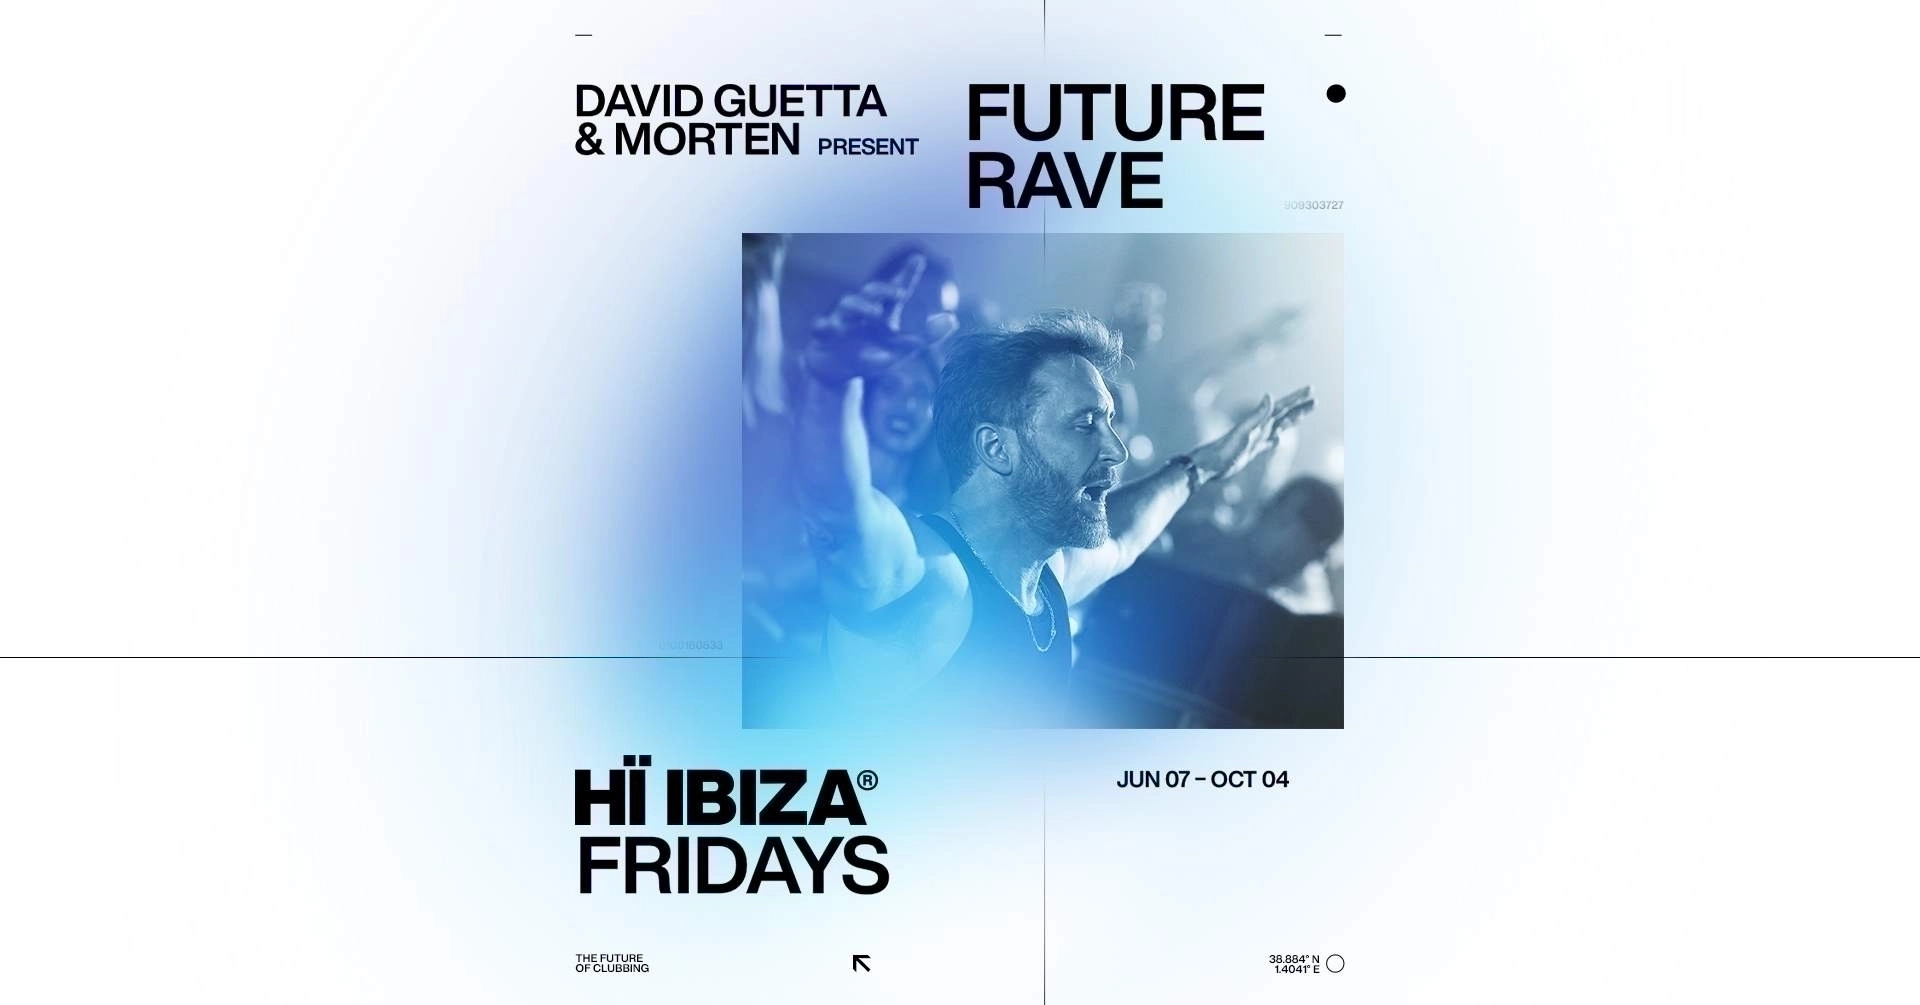 David Guetta - Morten Present Future Rave in der Hï Ibiza Tickets